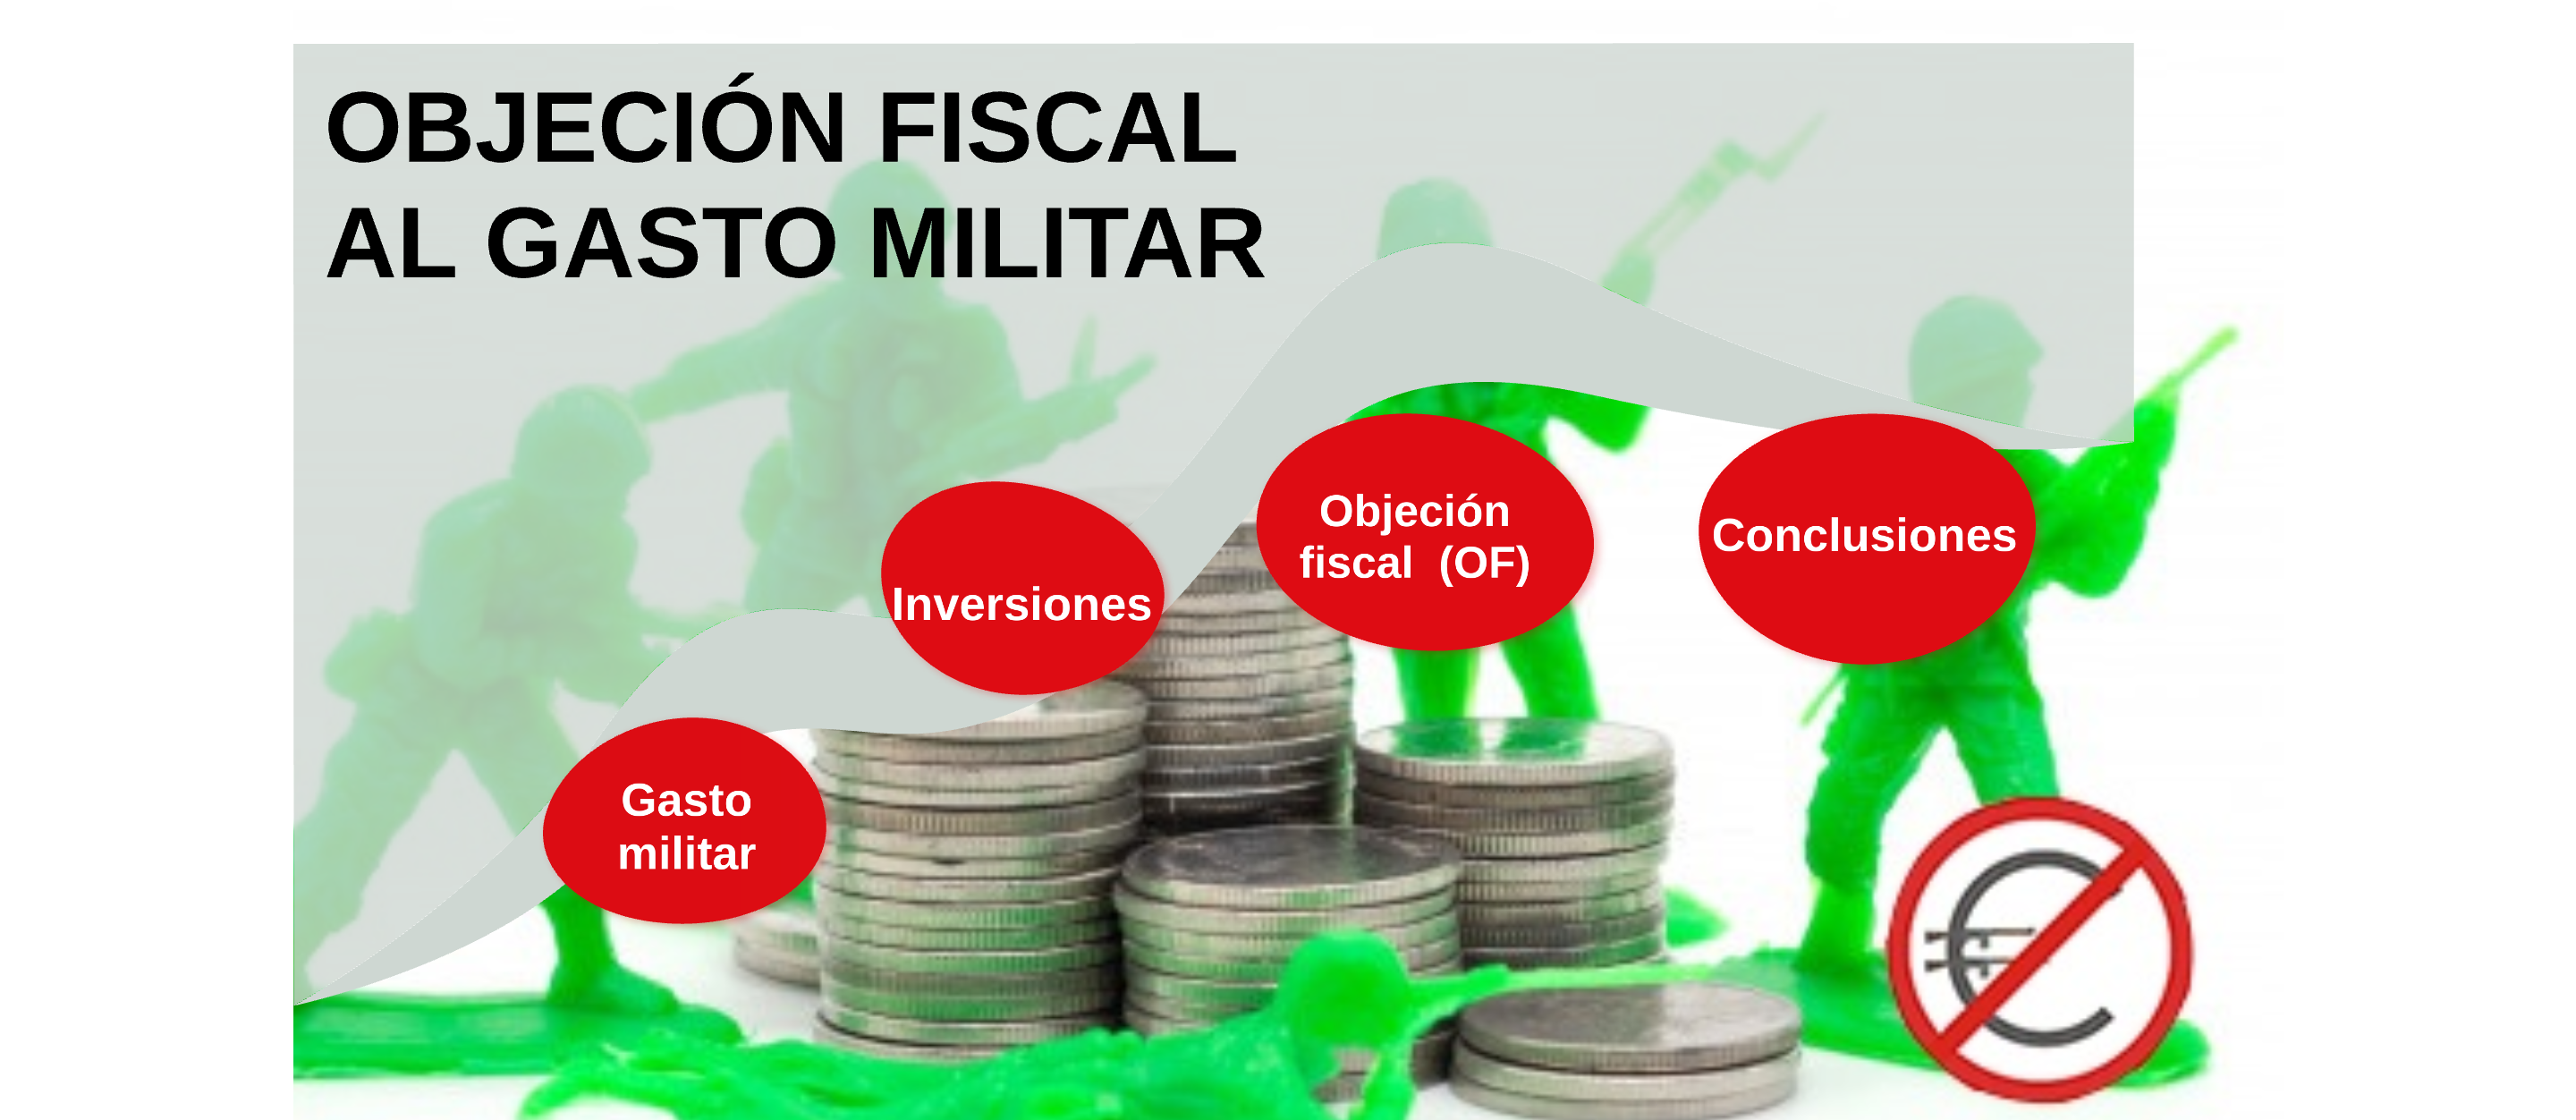 Objeción fiscal al gasto militar